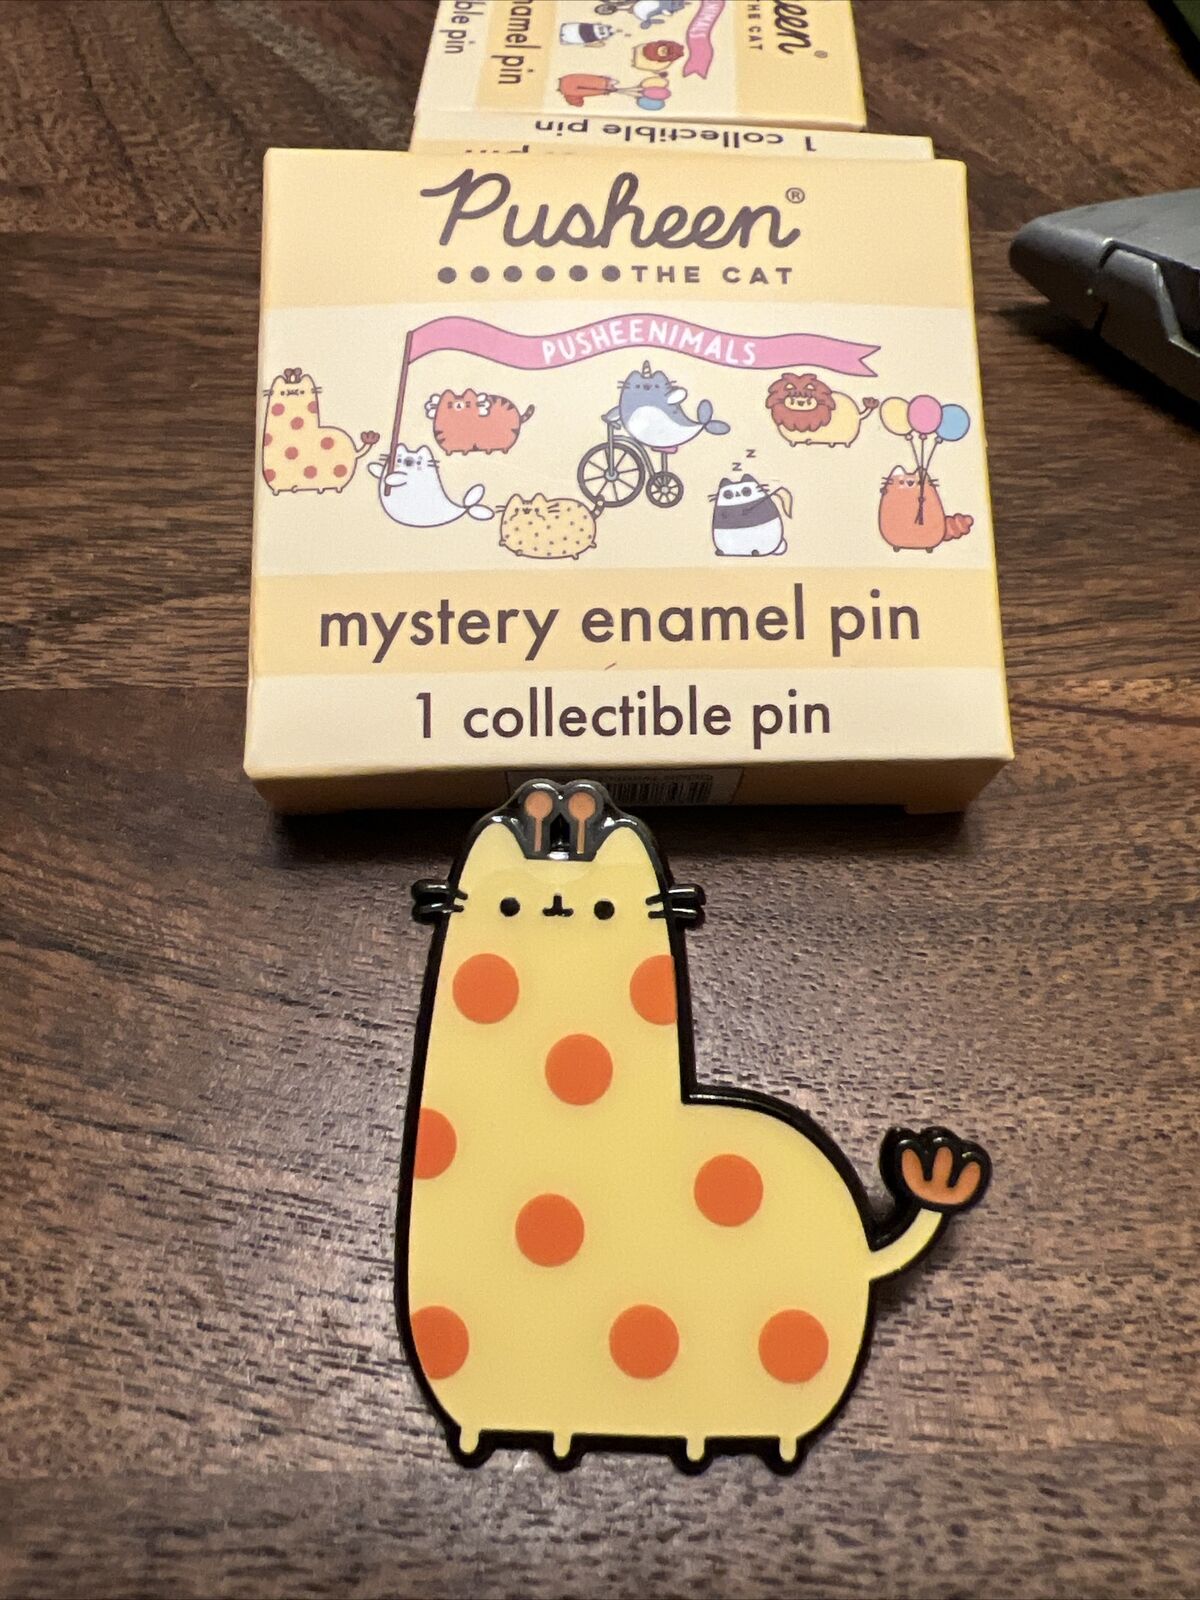 Pusheen Pusheenimals GIRAFFE Enamel Metal PIN NEW Mystery Cat 